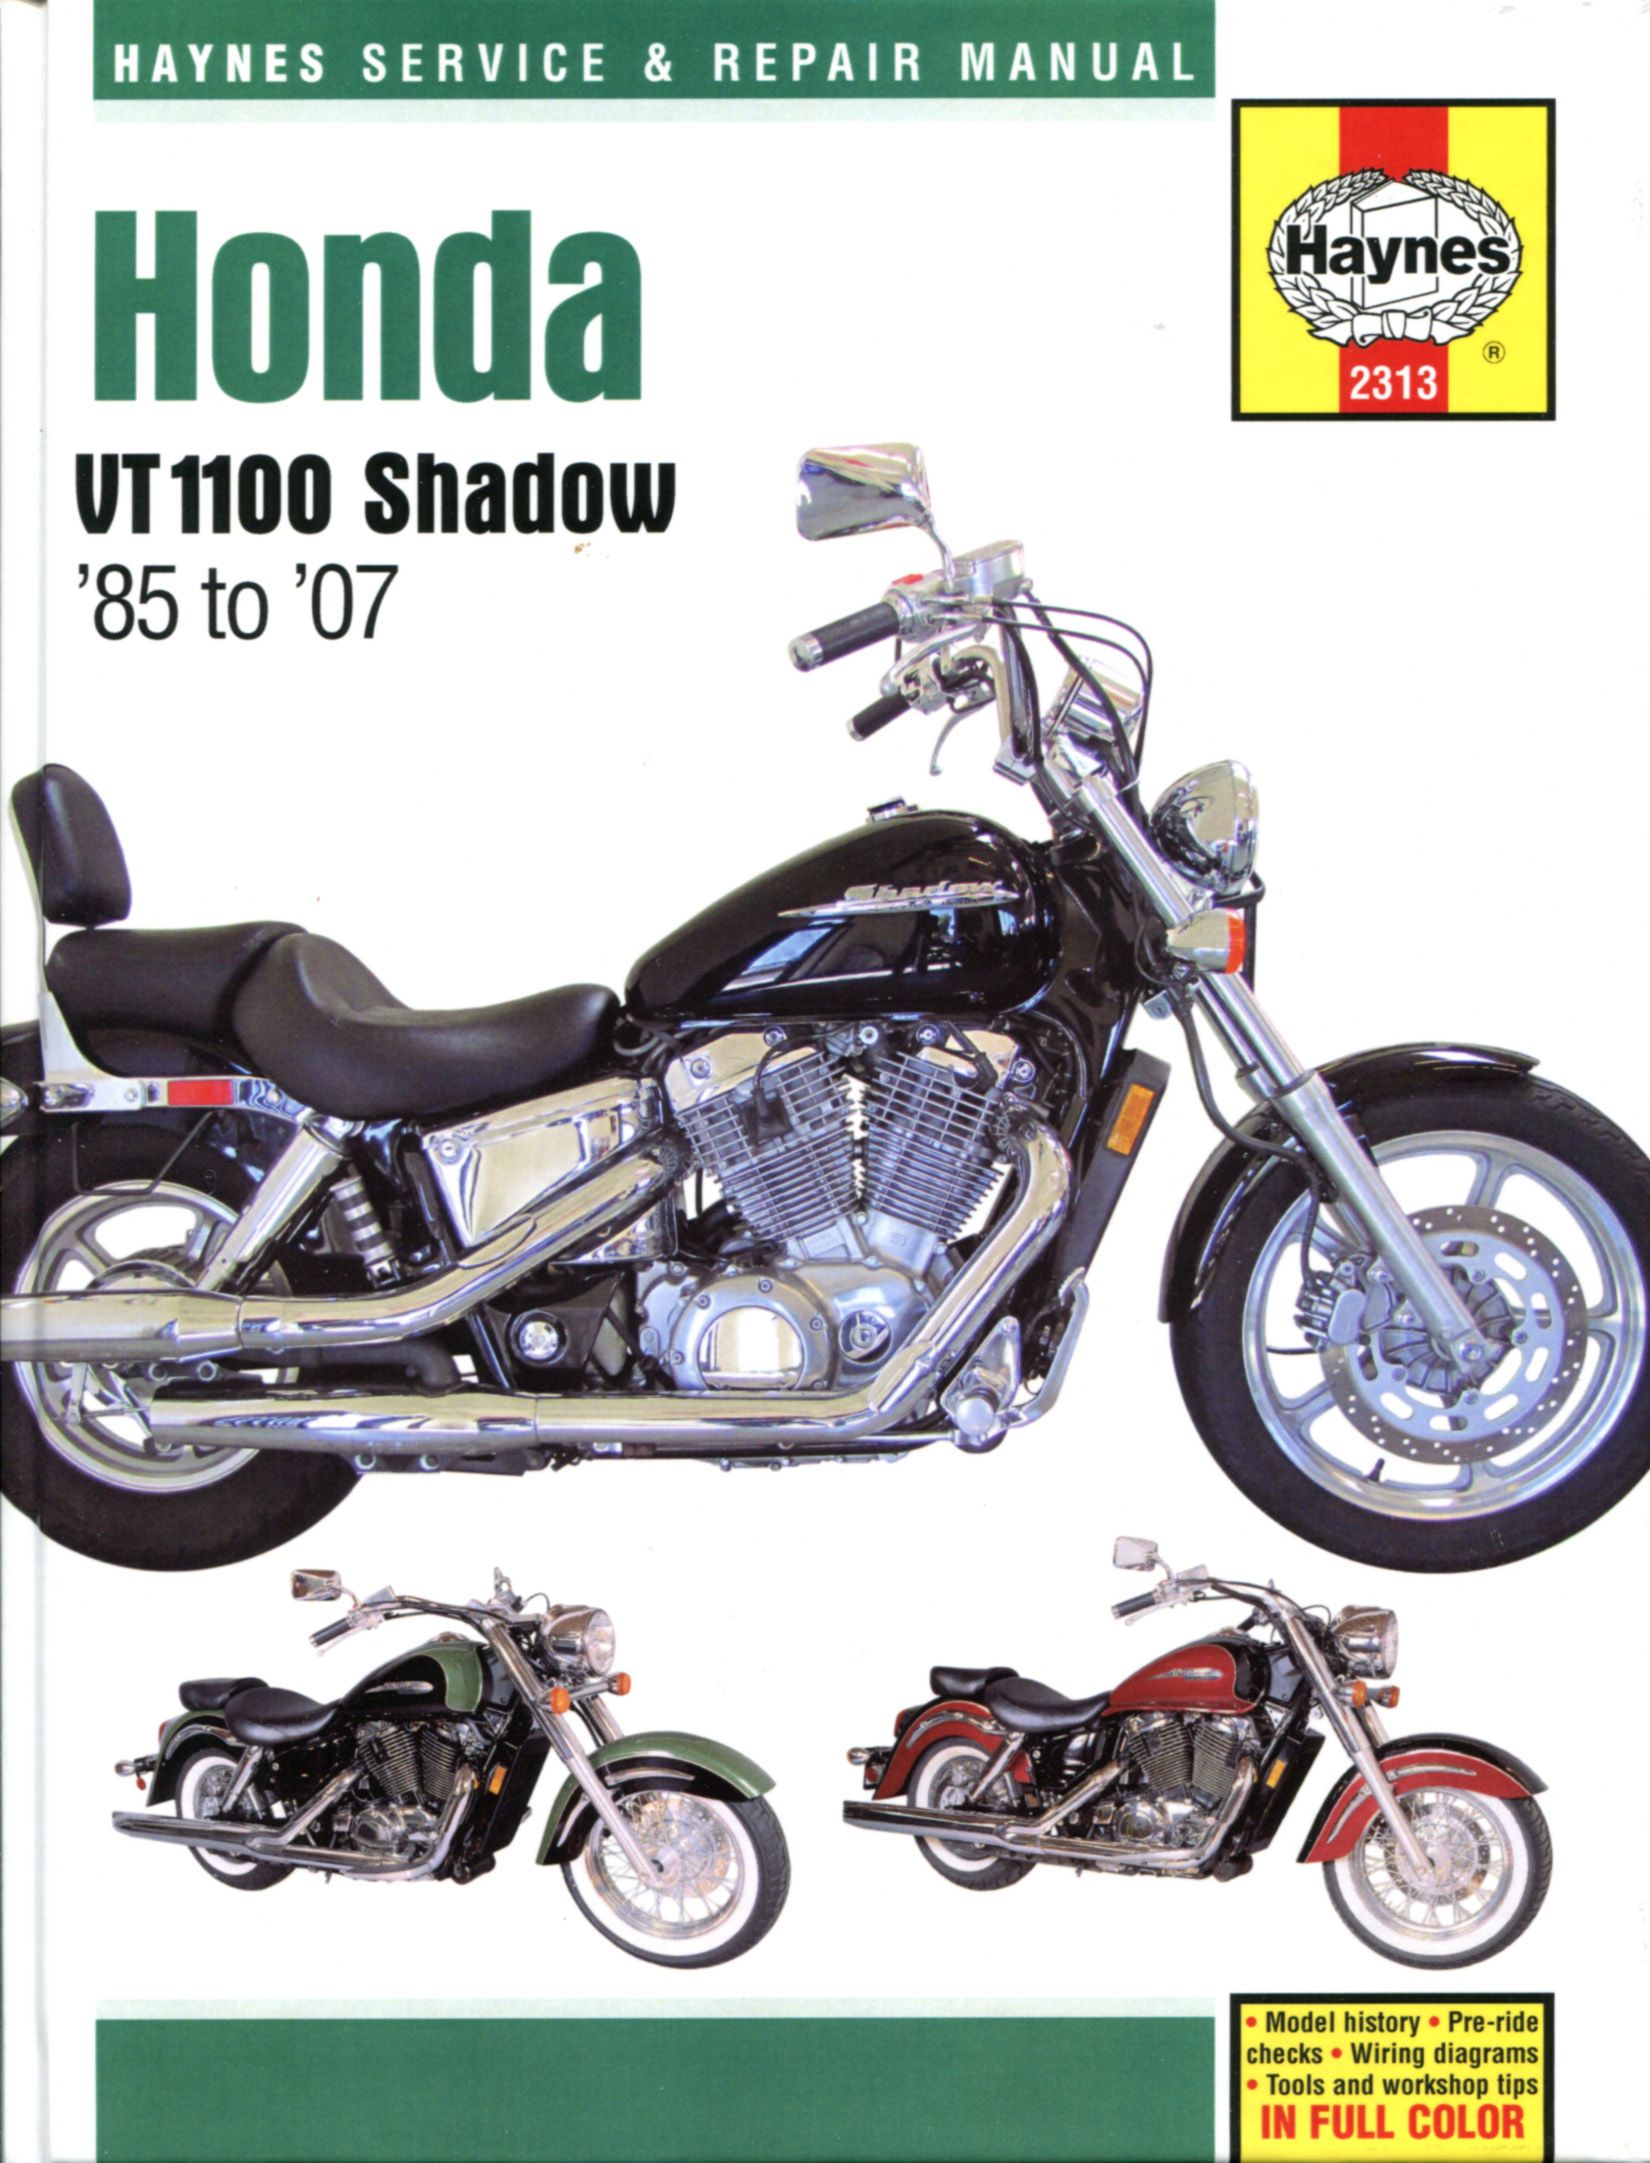 2002 Honda Shadow Sabre Wiring Diagram Wiring Diagram